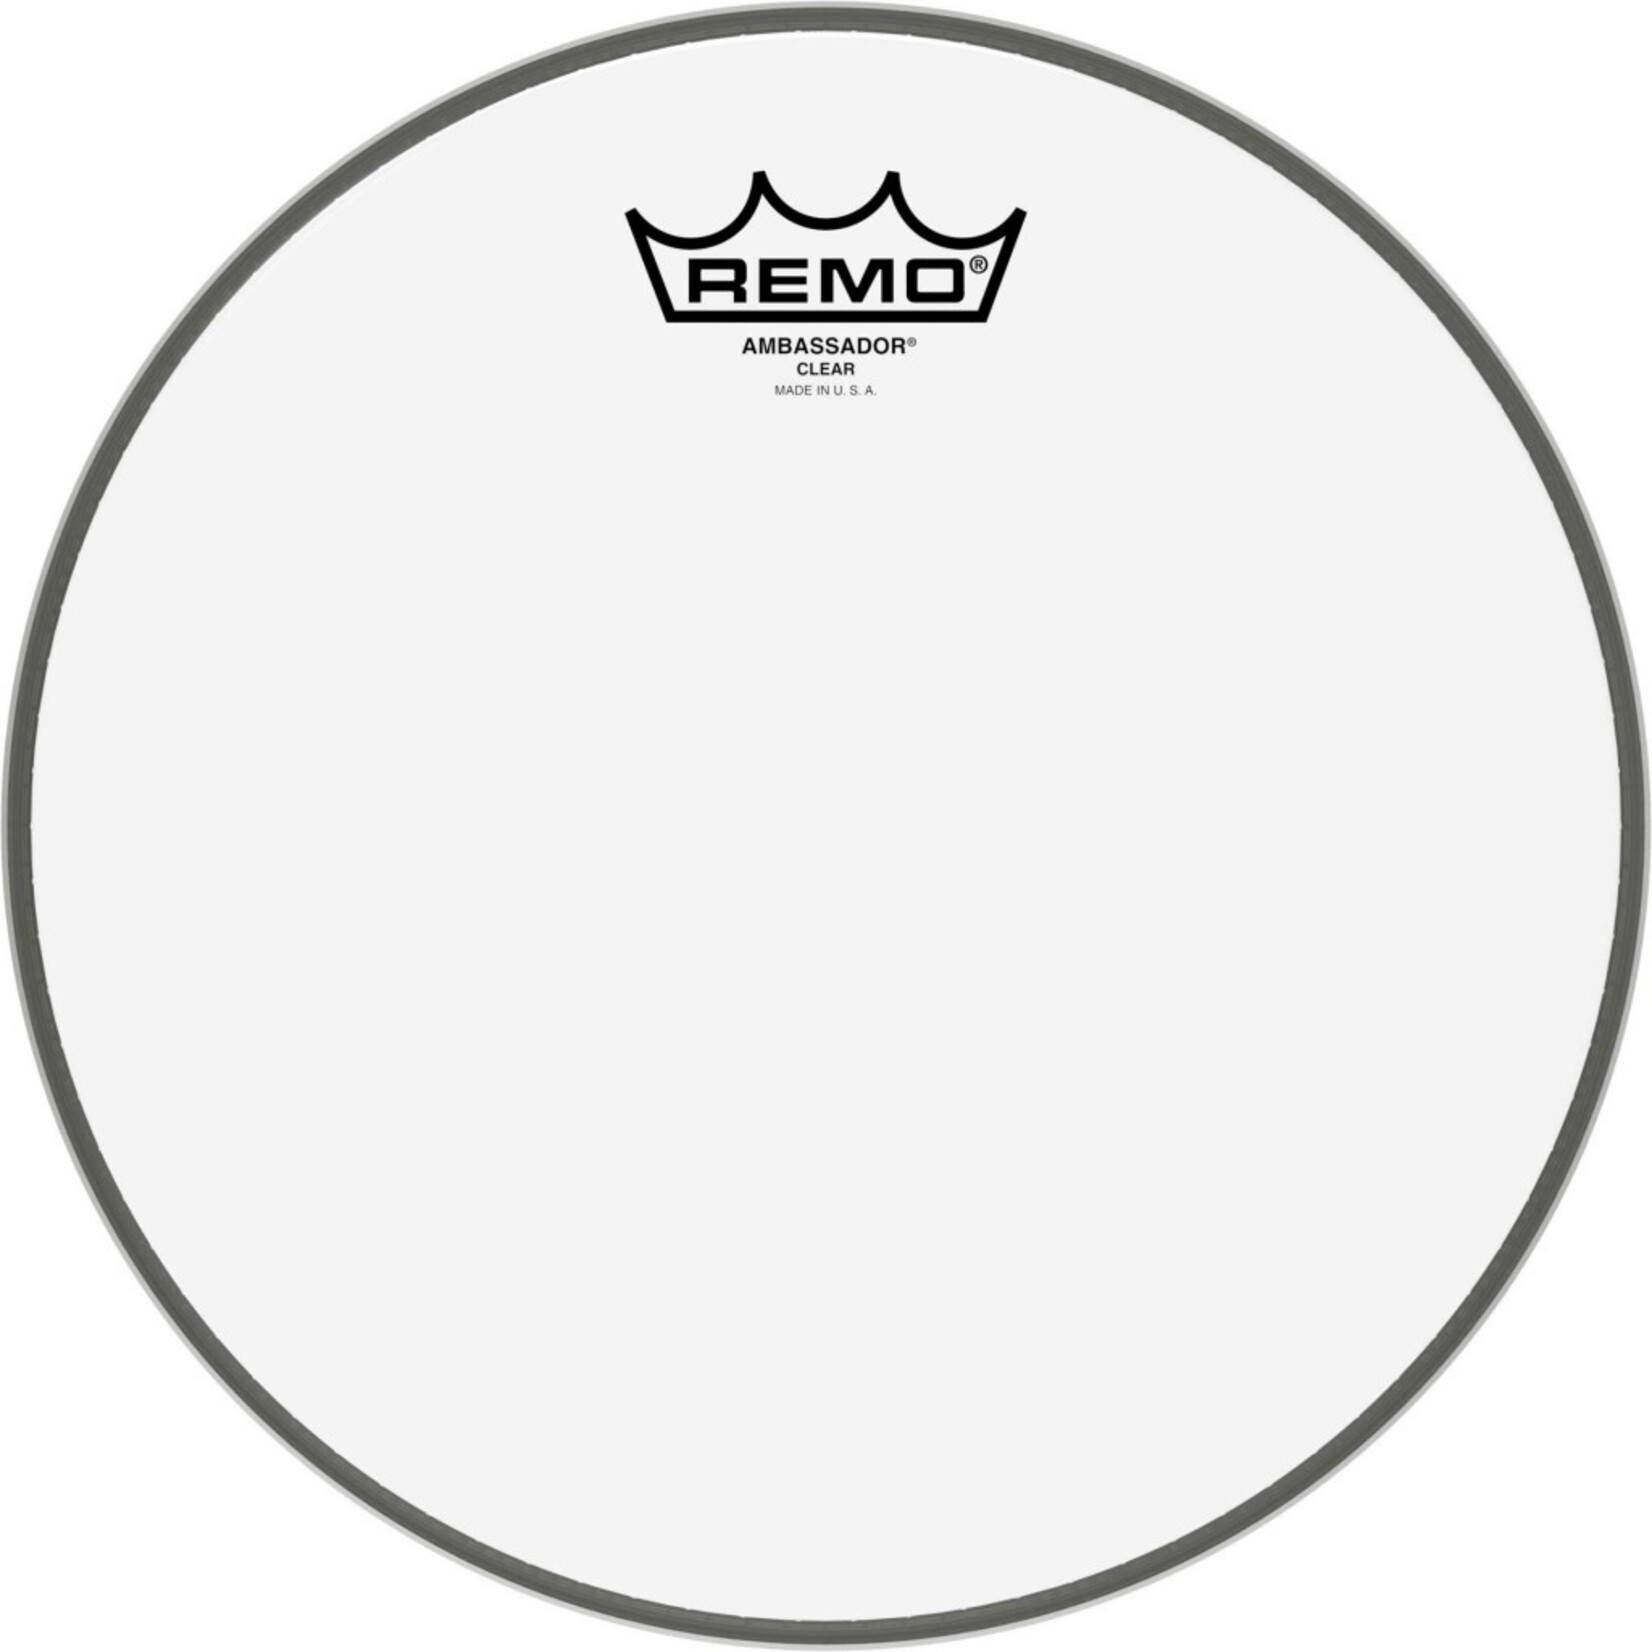 Remo Remo Ambassador drumvel